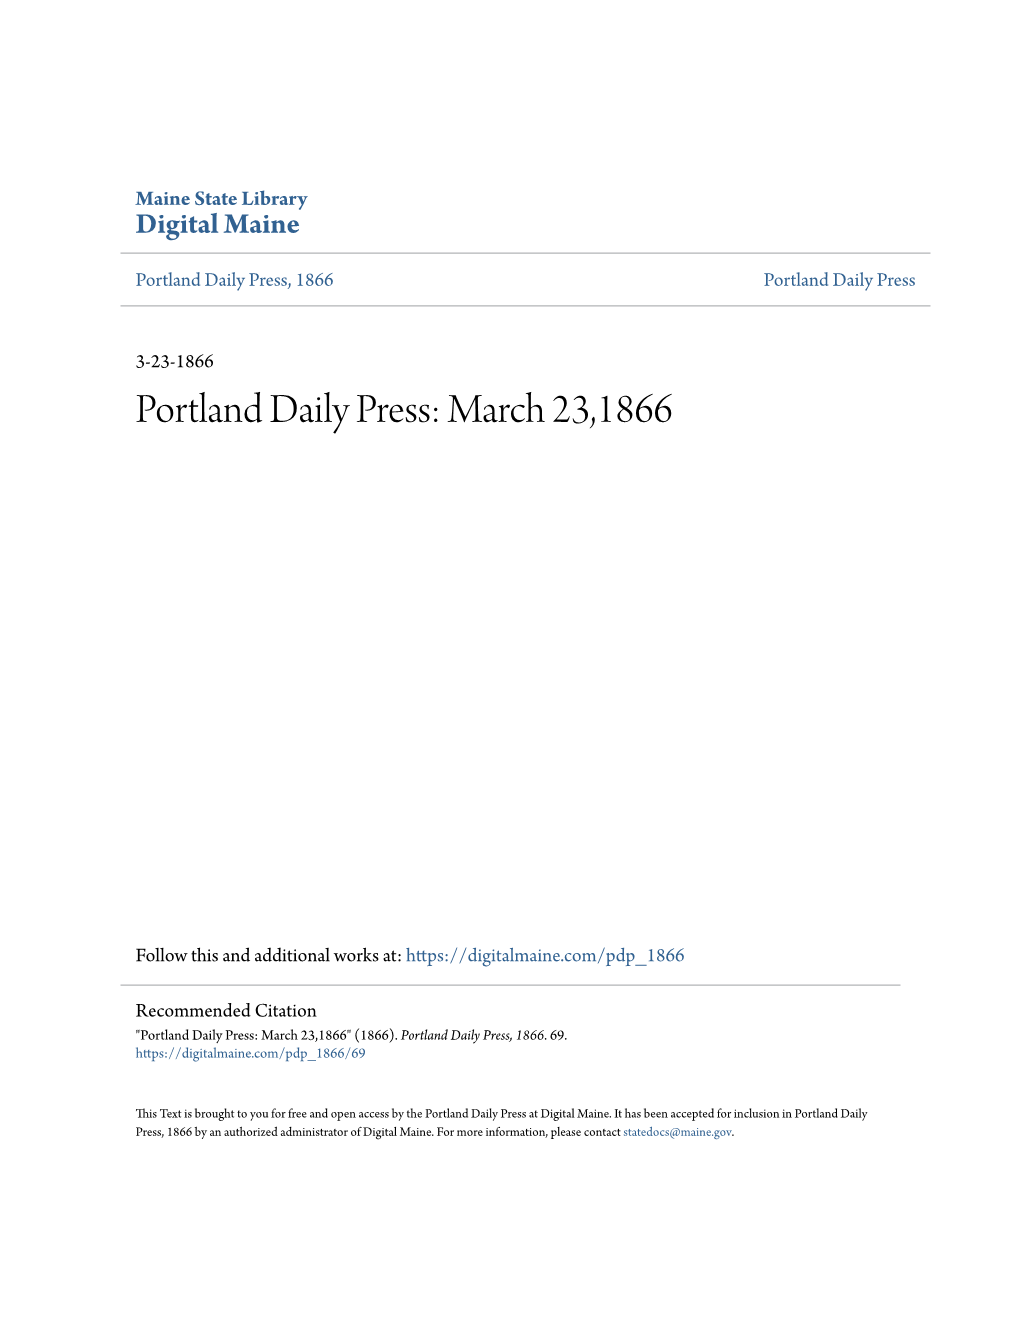 Portland Daily Press: March 23,1866